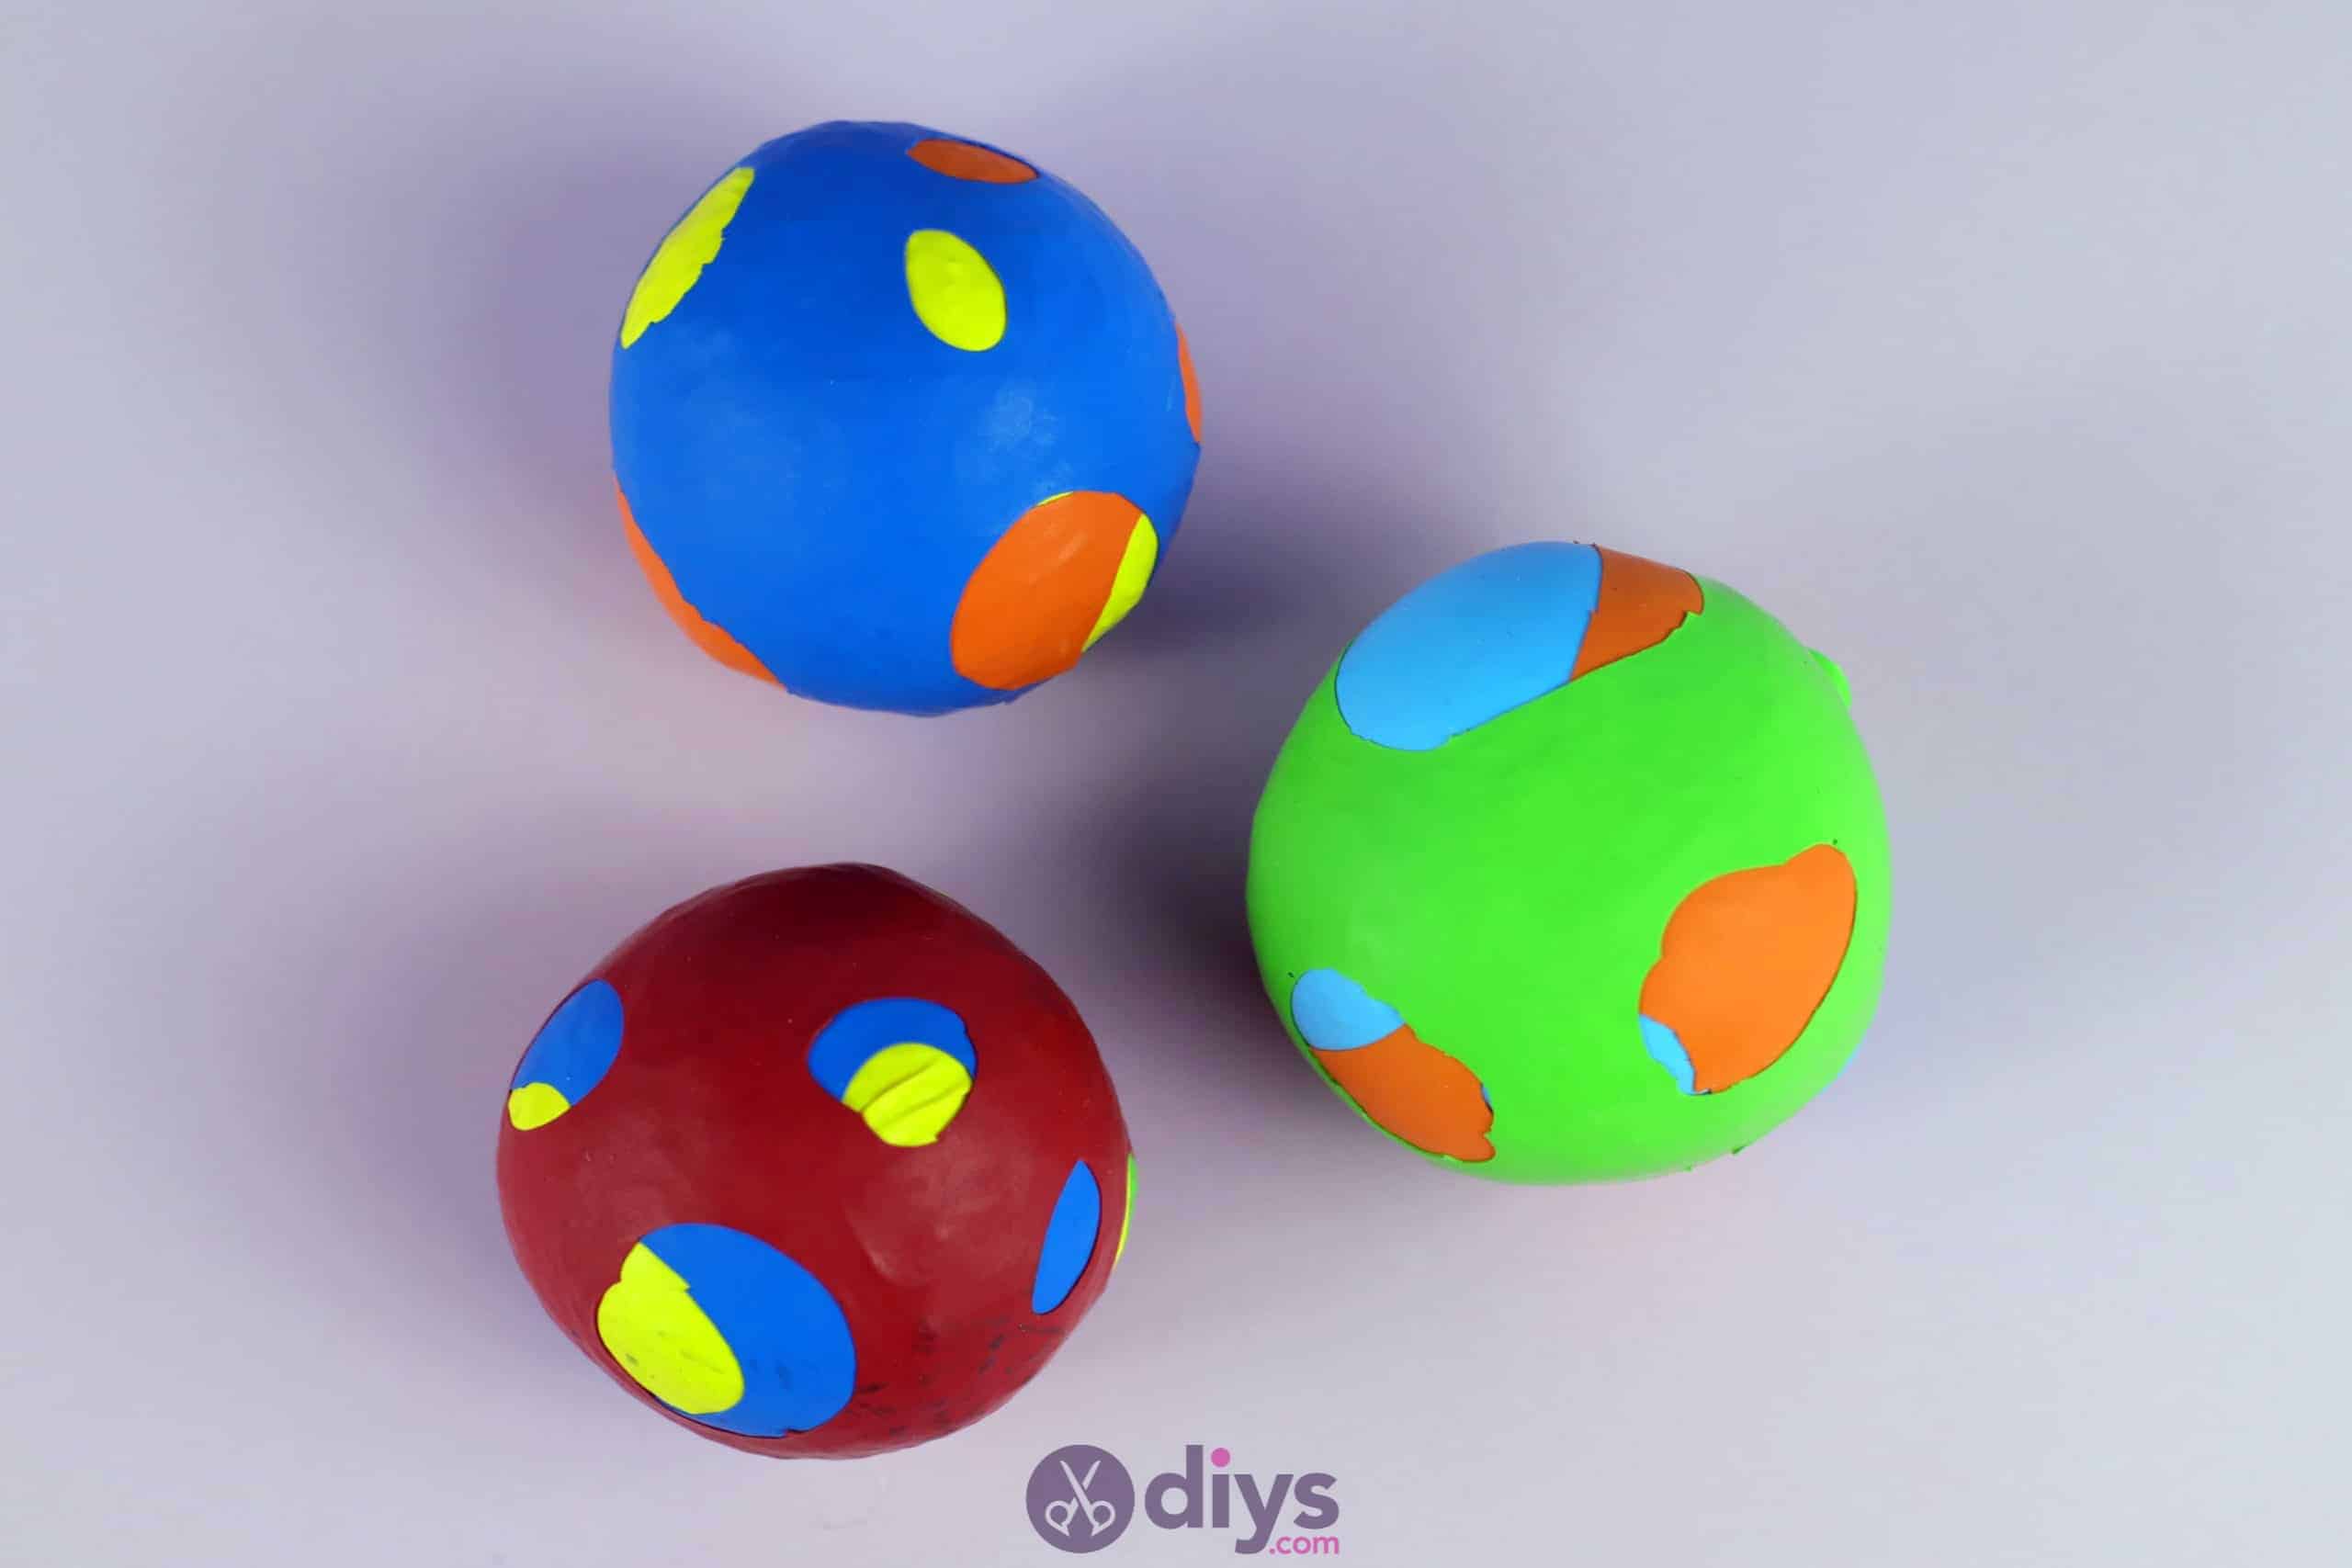 Diy juggling balls craft